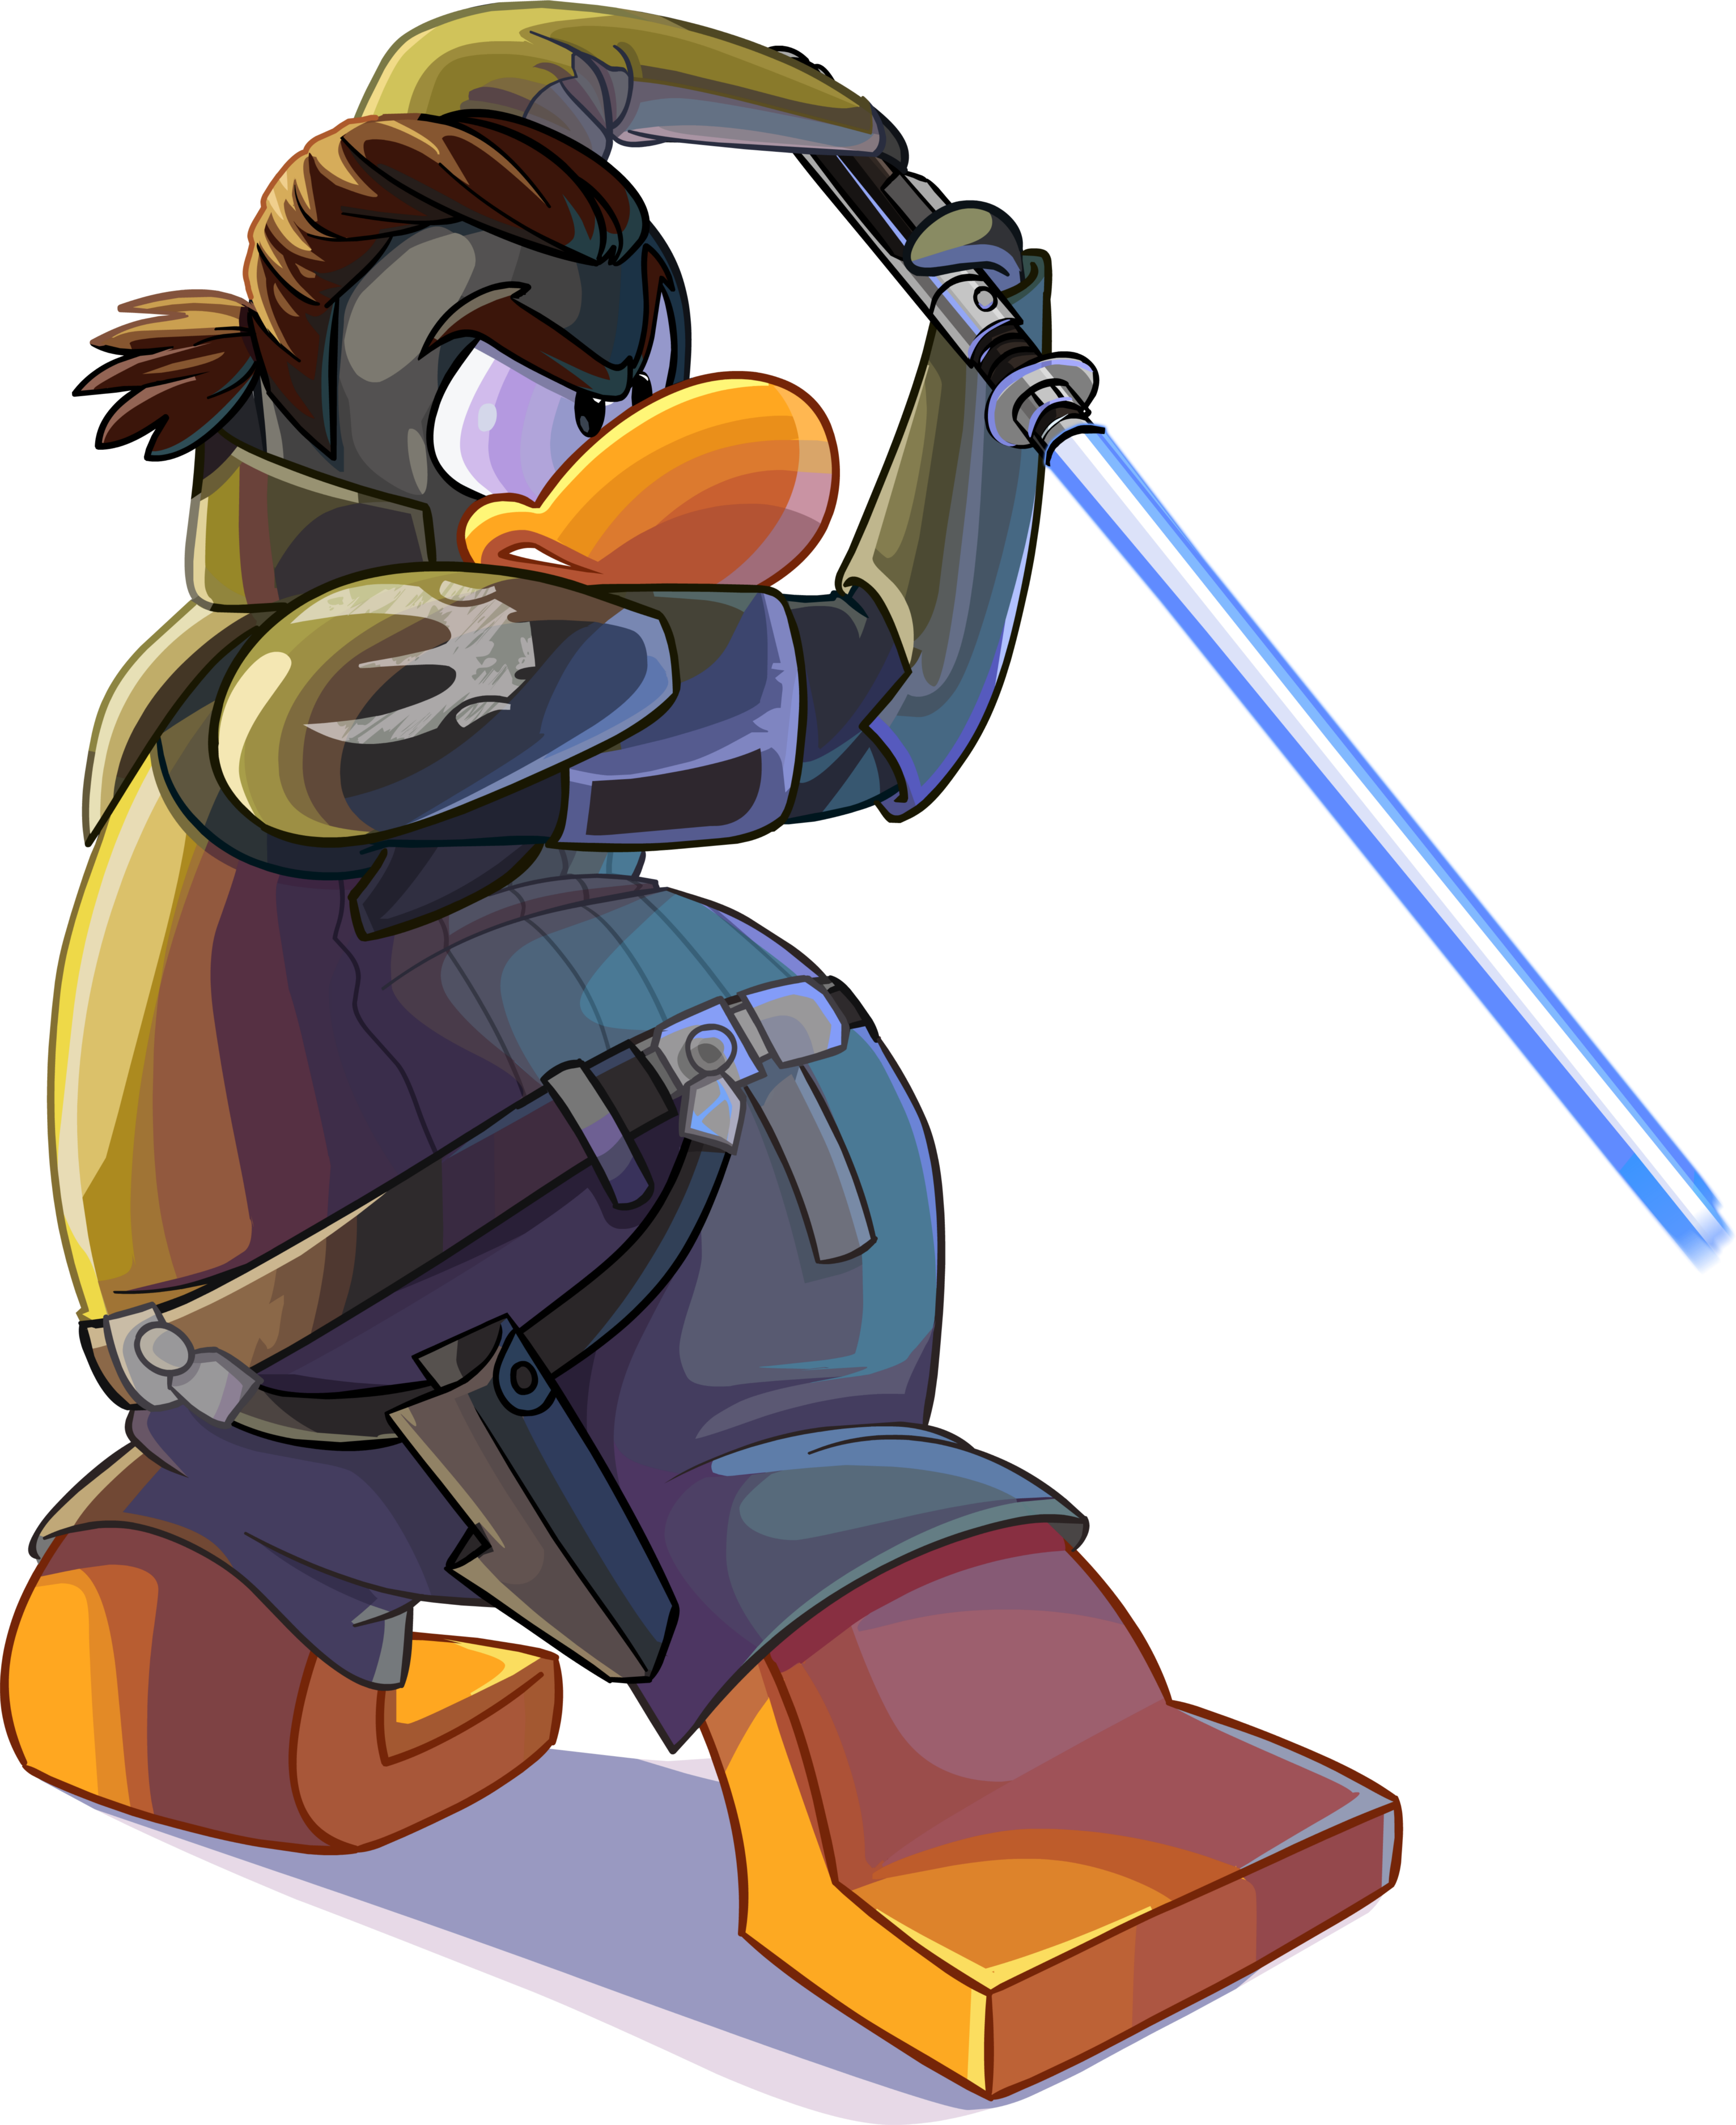 lightsaber clipart club penguin